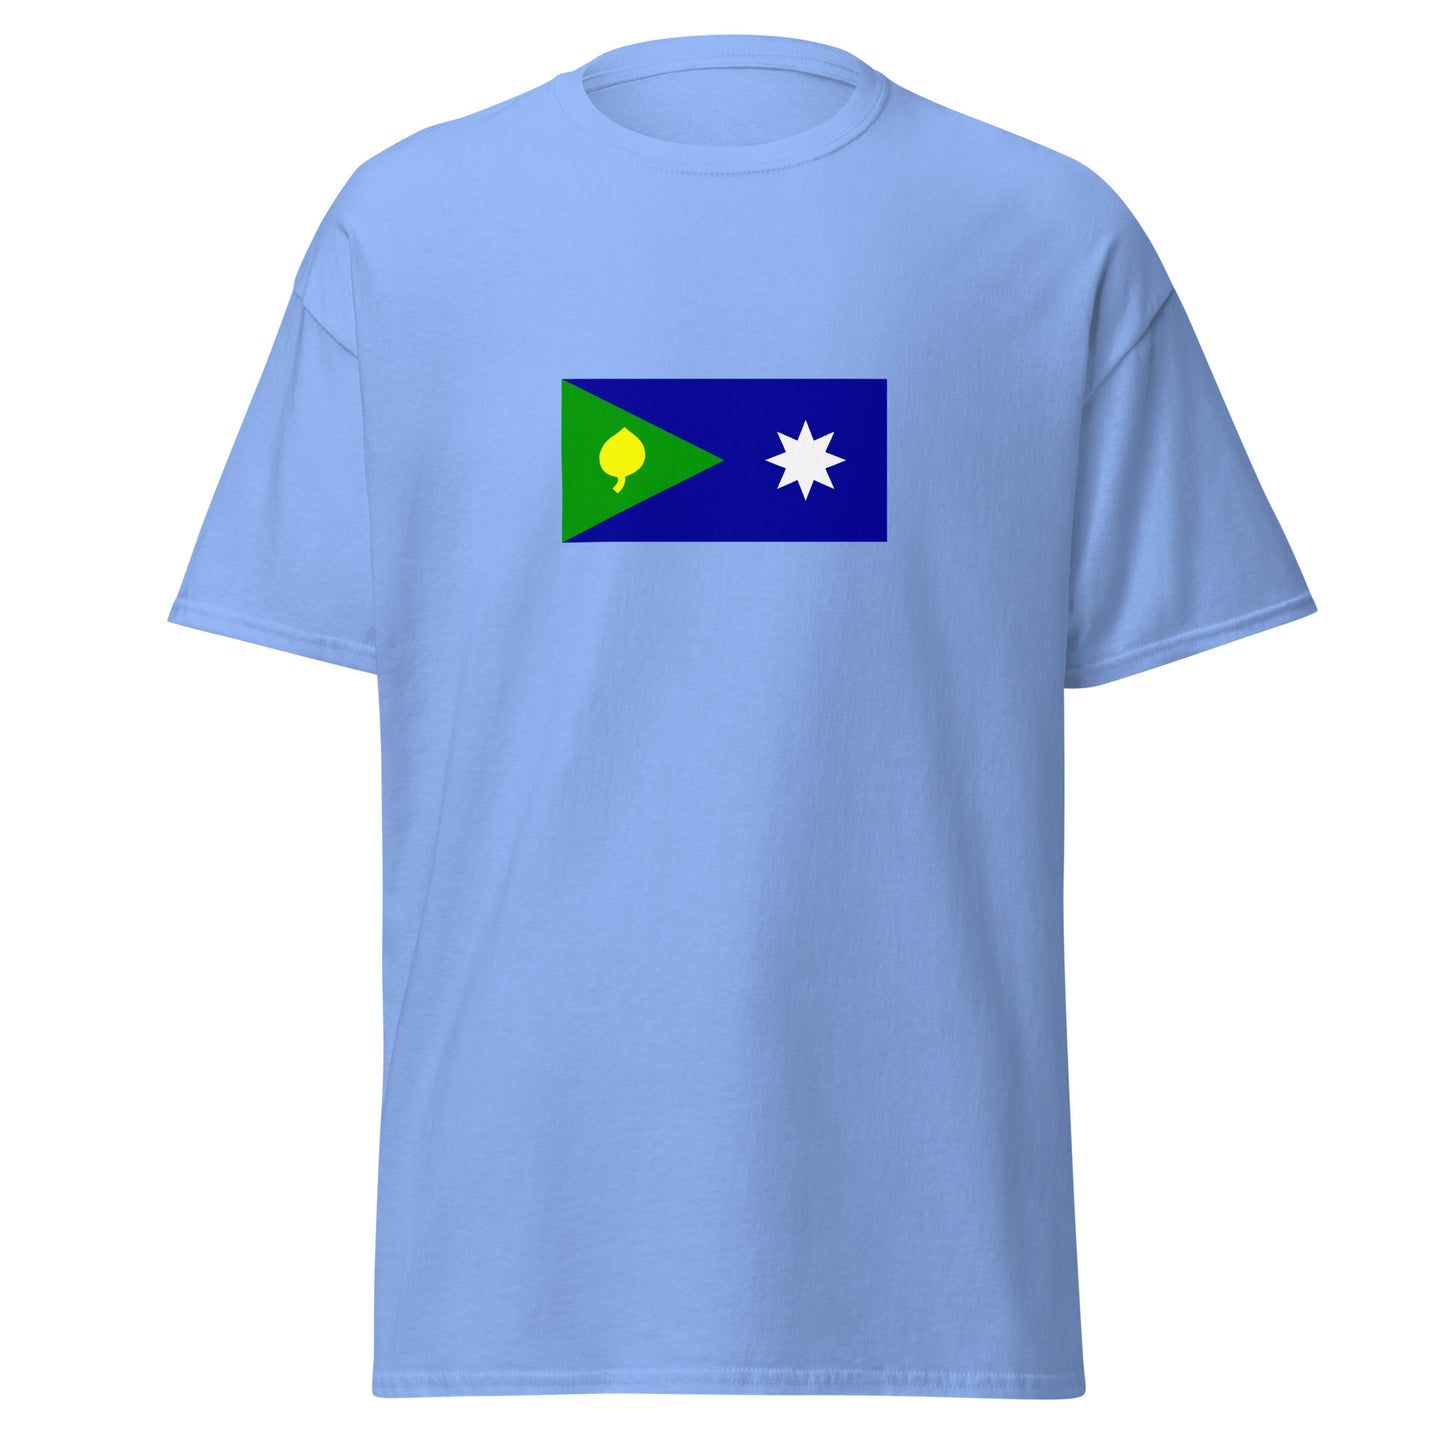 Australia - Saibai Island people | Aboriginal Australian Flag Interactive T-shirt